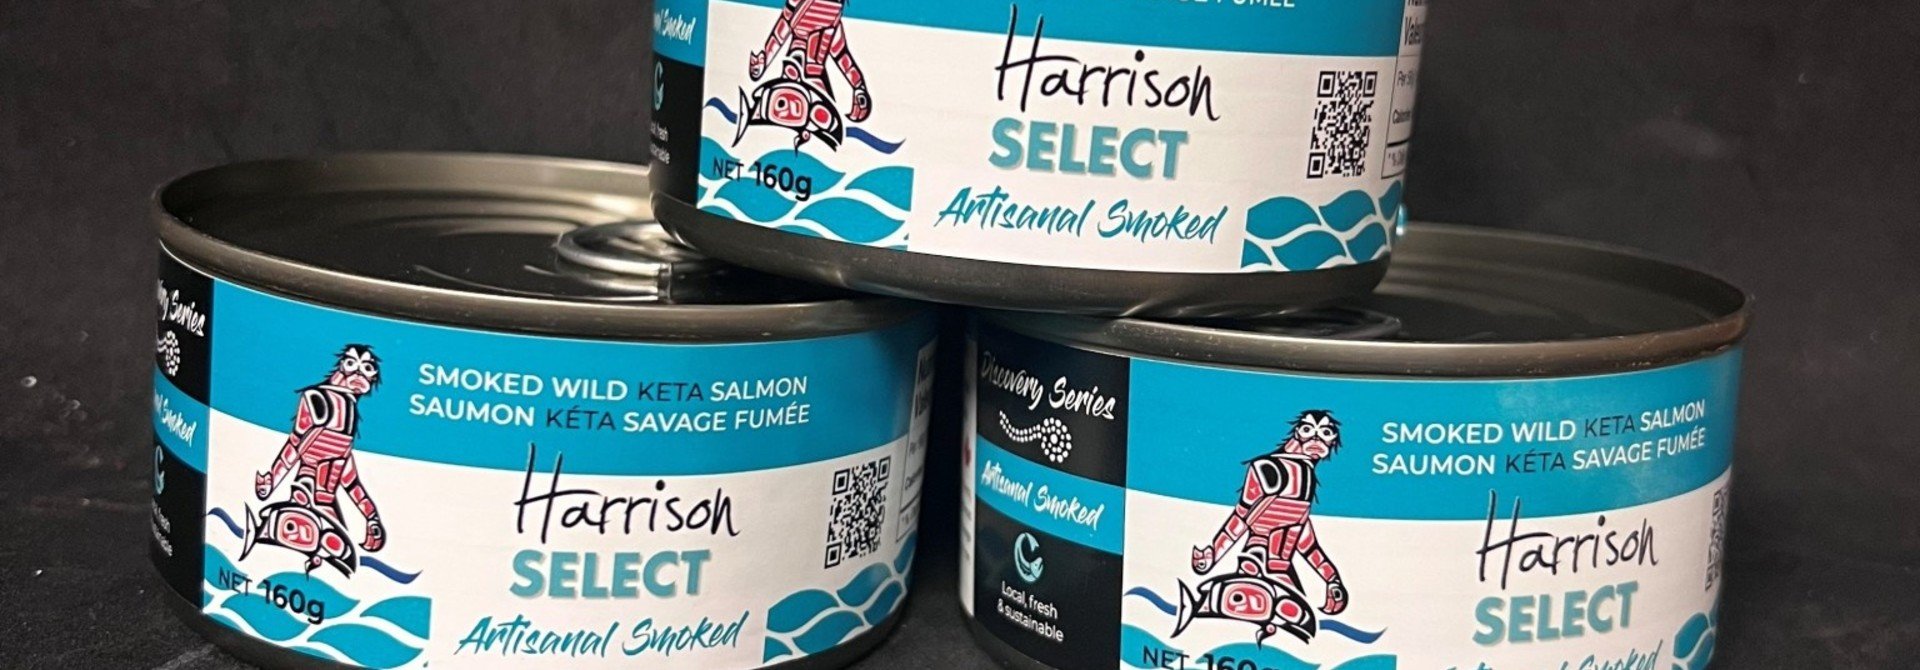 Harrison Select Canned Smoked Wild Keta Salmon - River Select